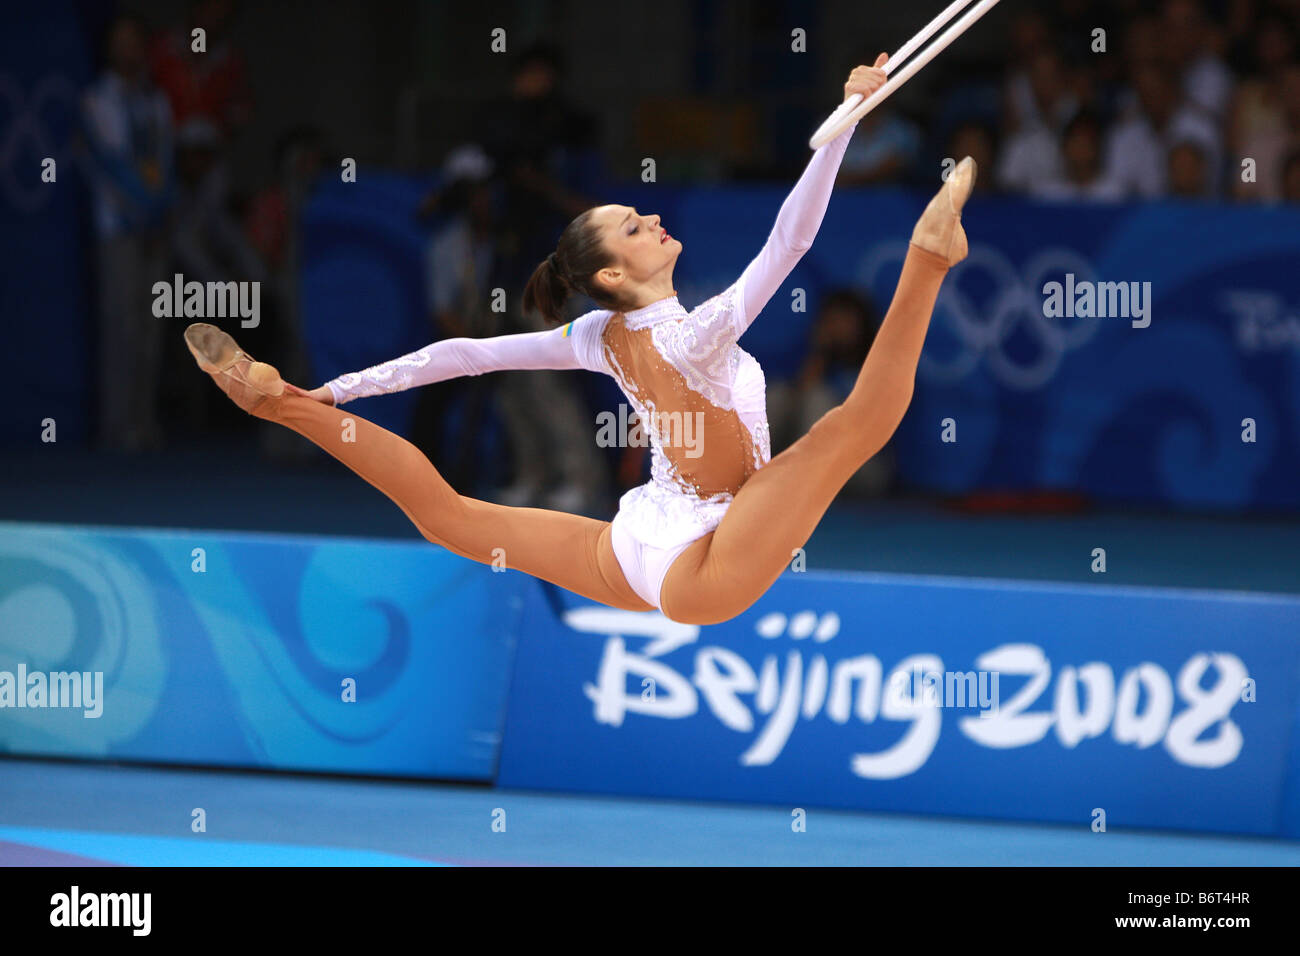 Aug 23, 2008; Beijing, China; Rhythmic gymnast Anna Bessonova (Ukraine) leaps with hoop to win bronze medal at 2008 Olympics. Stock Photo